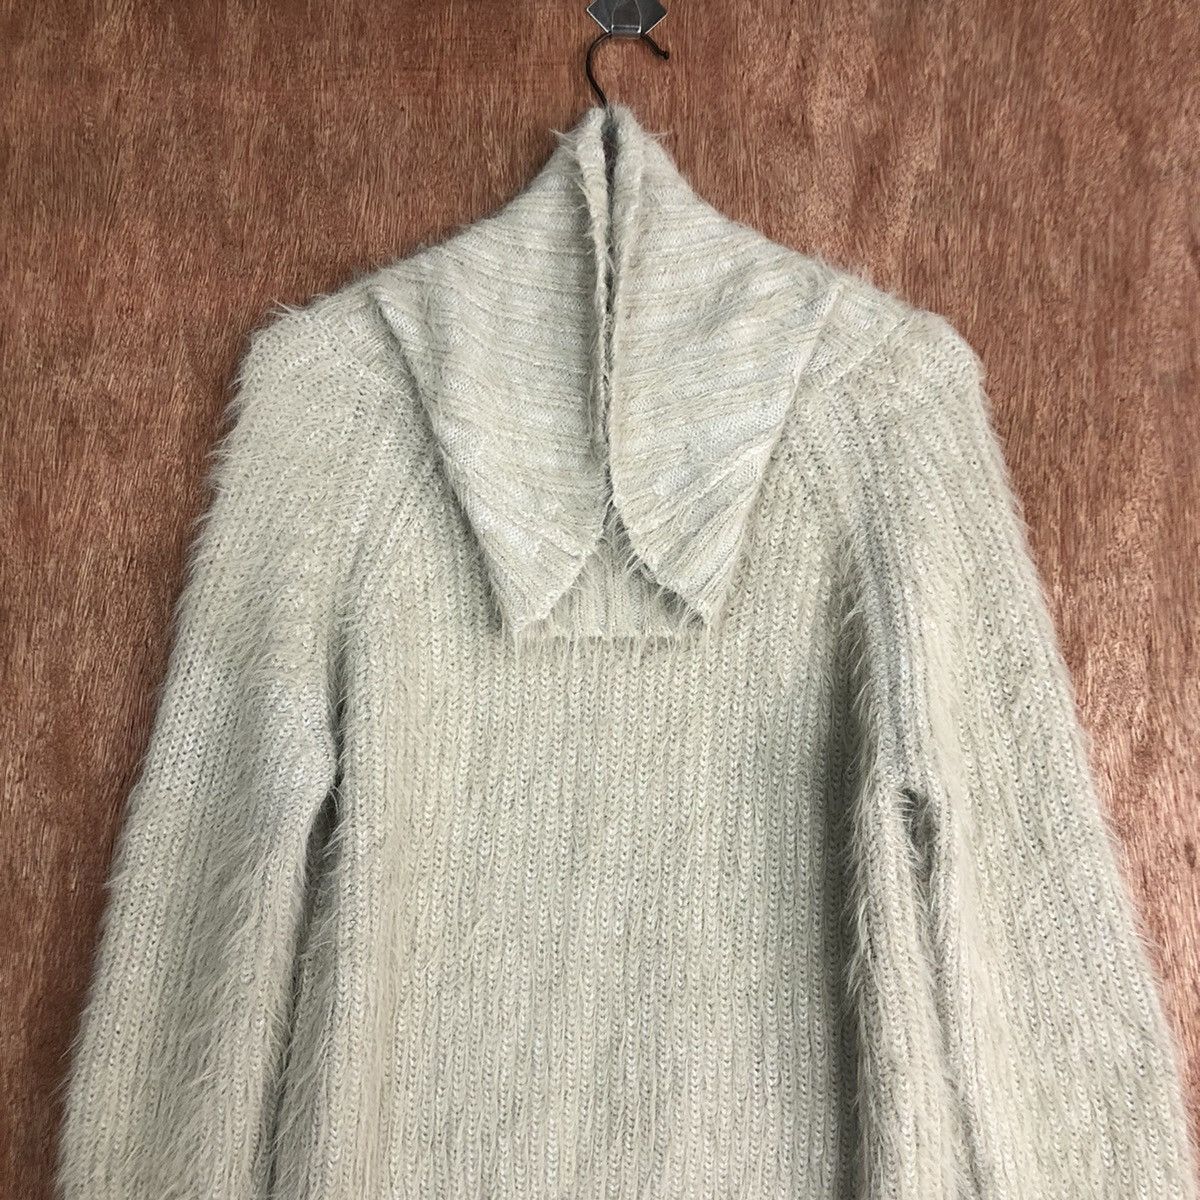 Homespun Knitwear Turtle Neck Mohair Knit Sweater Size US S / EU 44-46 / 1 - 2 Preview